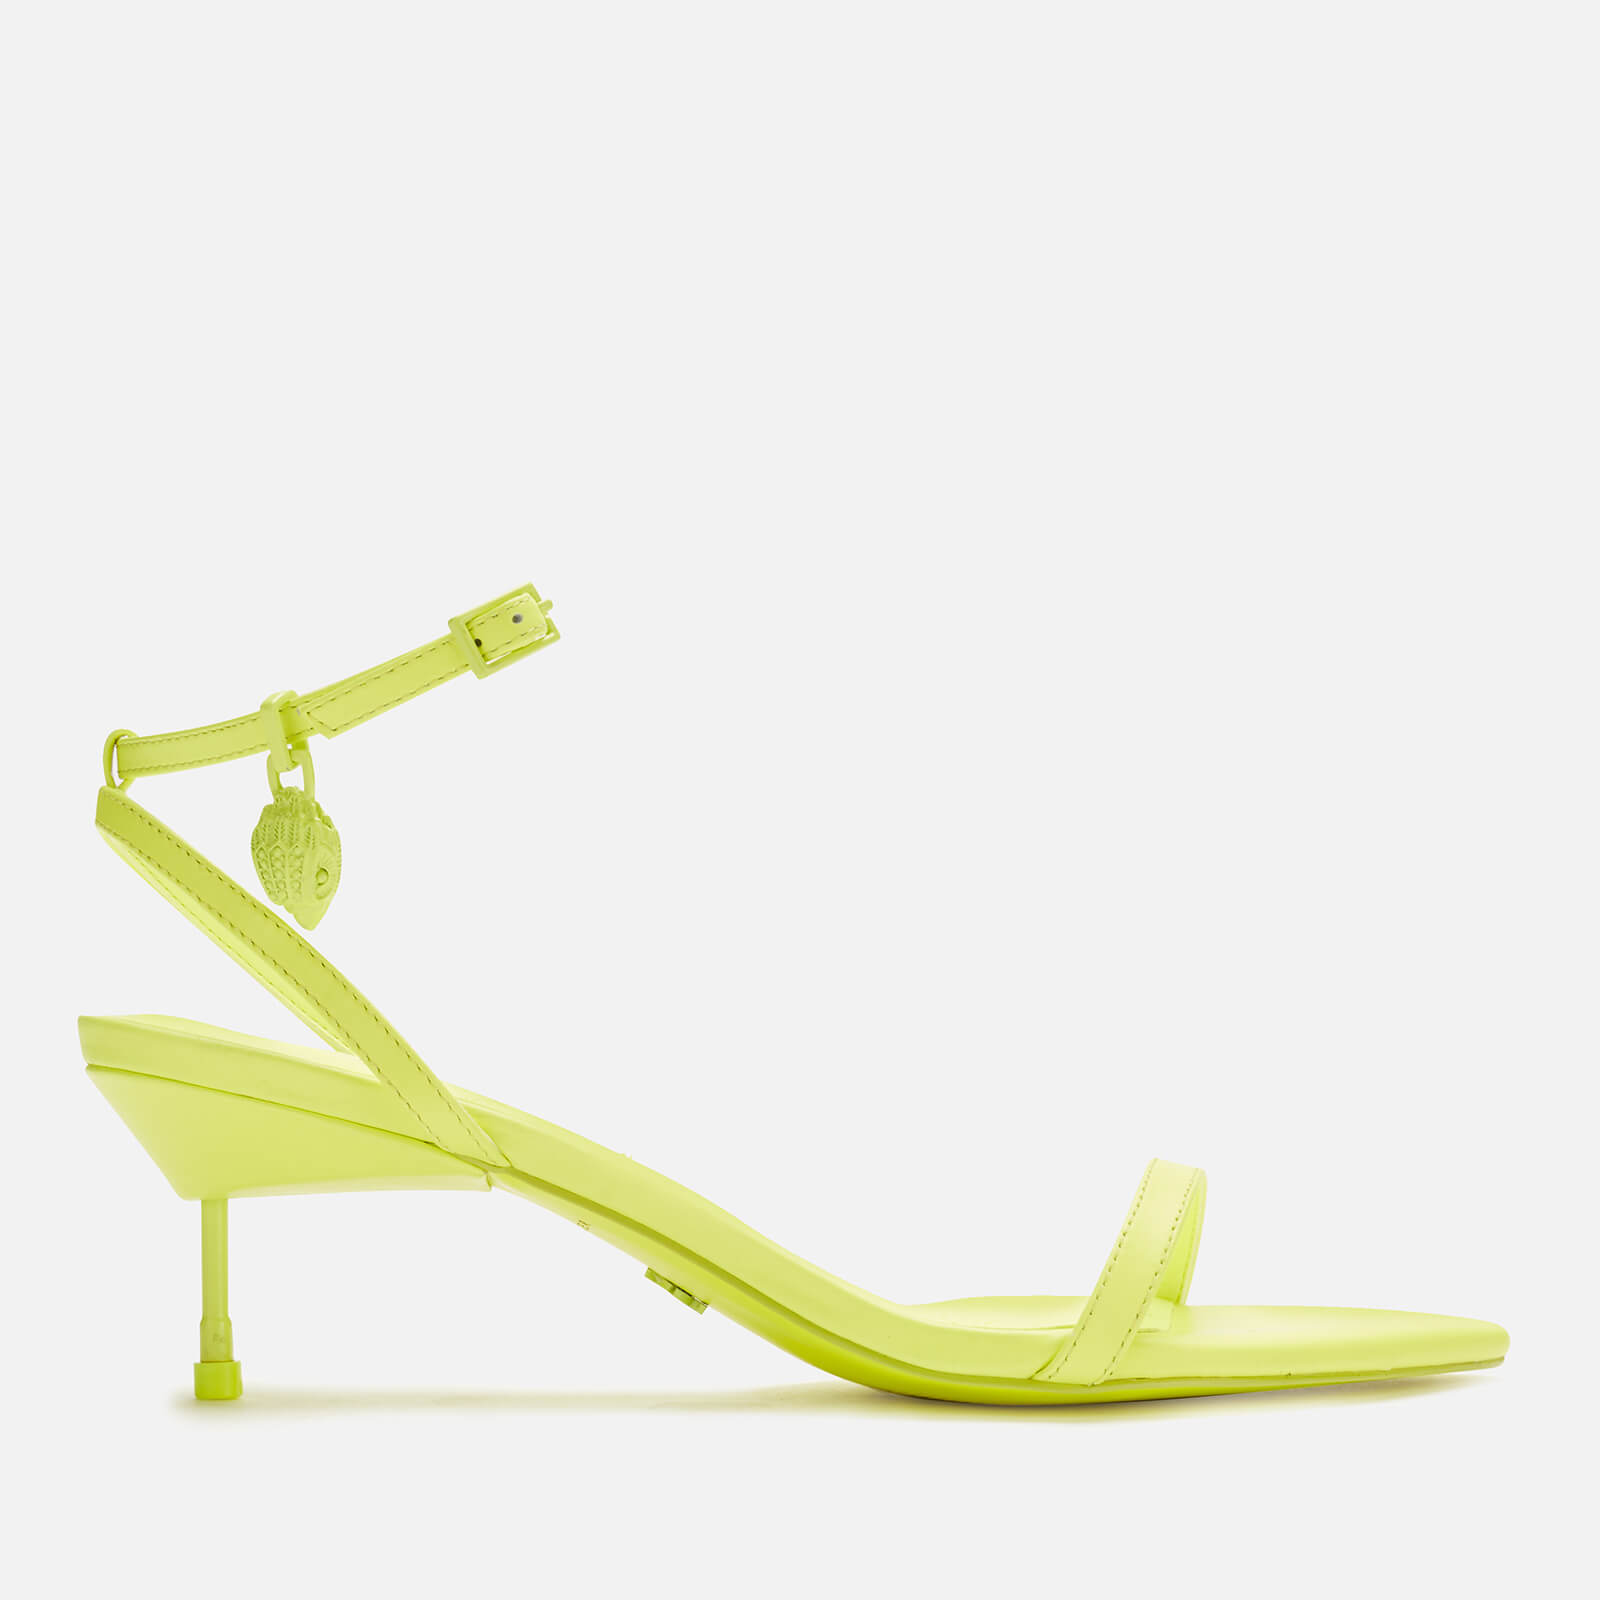 Kurt Geiger London Women's Shoreditch Barely There Heeled Sandals - Yellow - UK 3